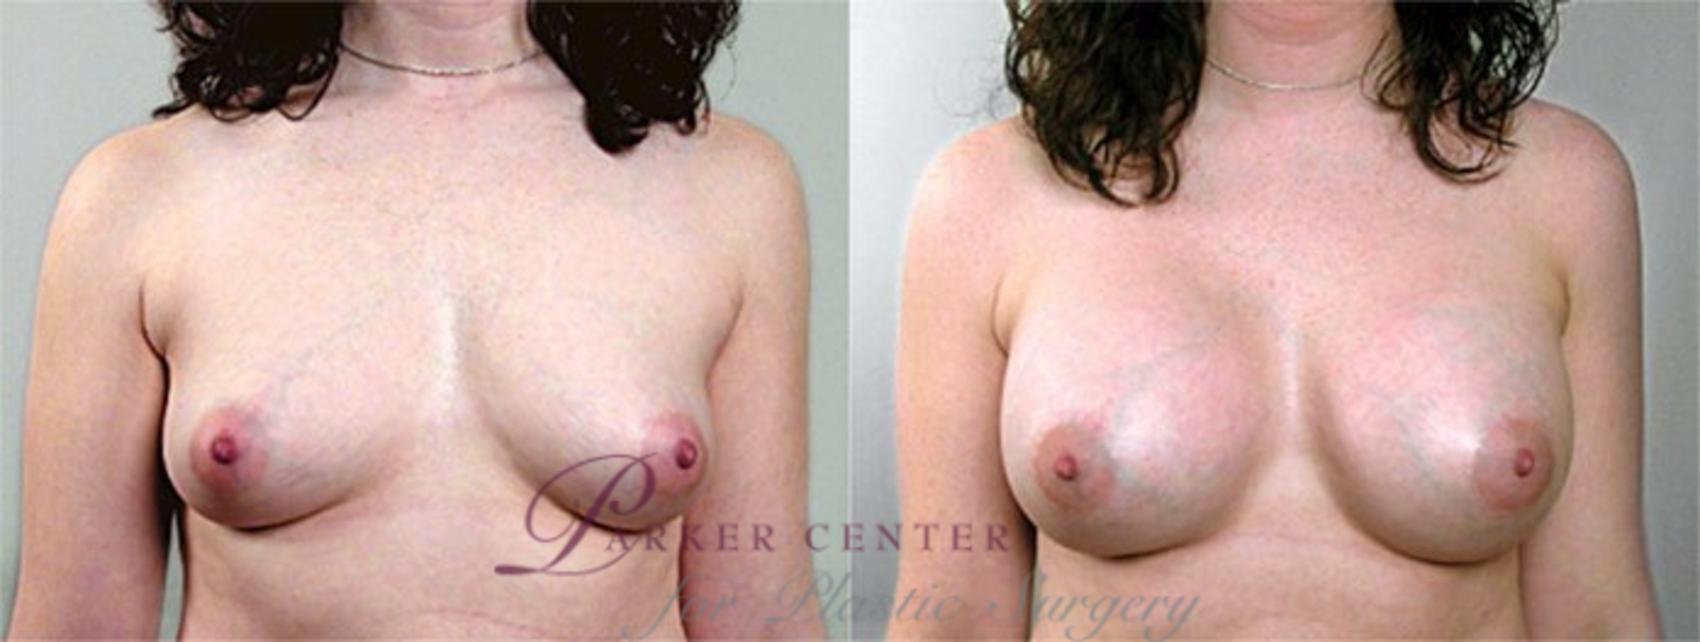 Breast Augmentation Case 380 Before & After View #1 | Paramus, NJ | Parker Center for Plastic Surgery